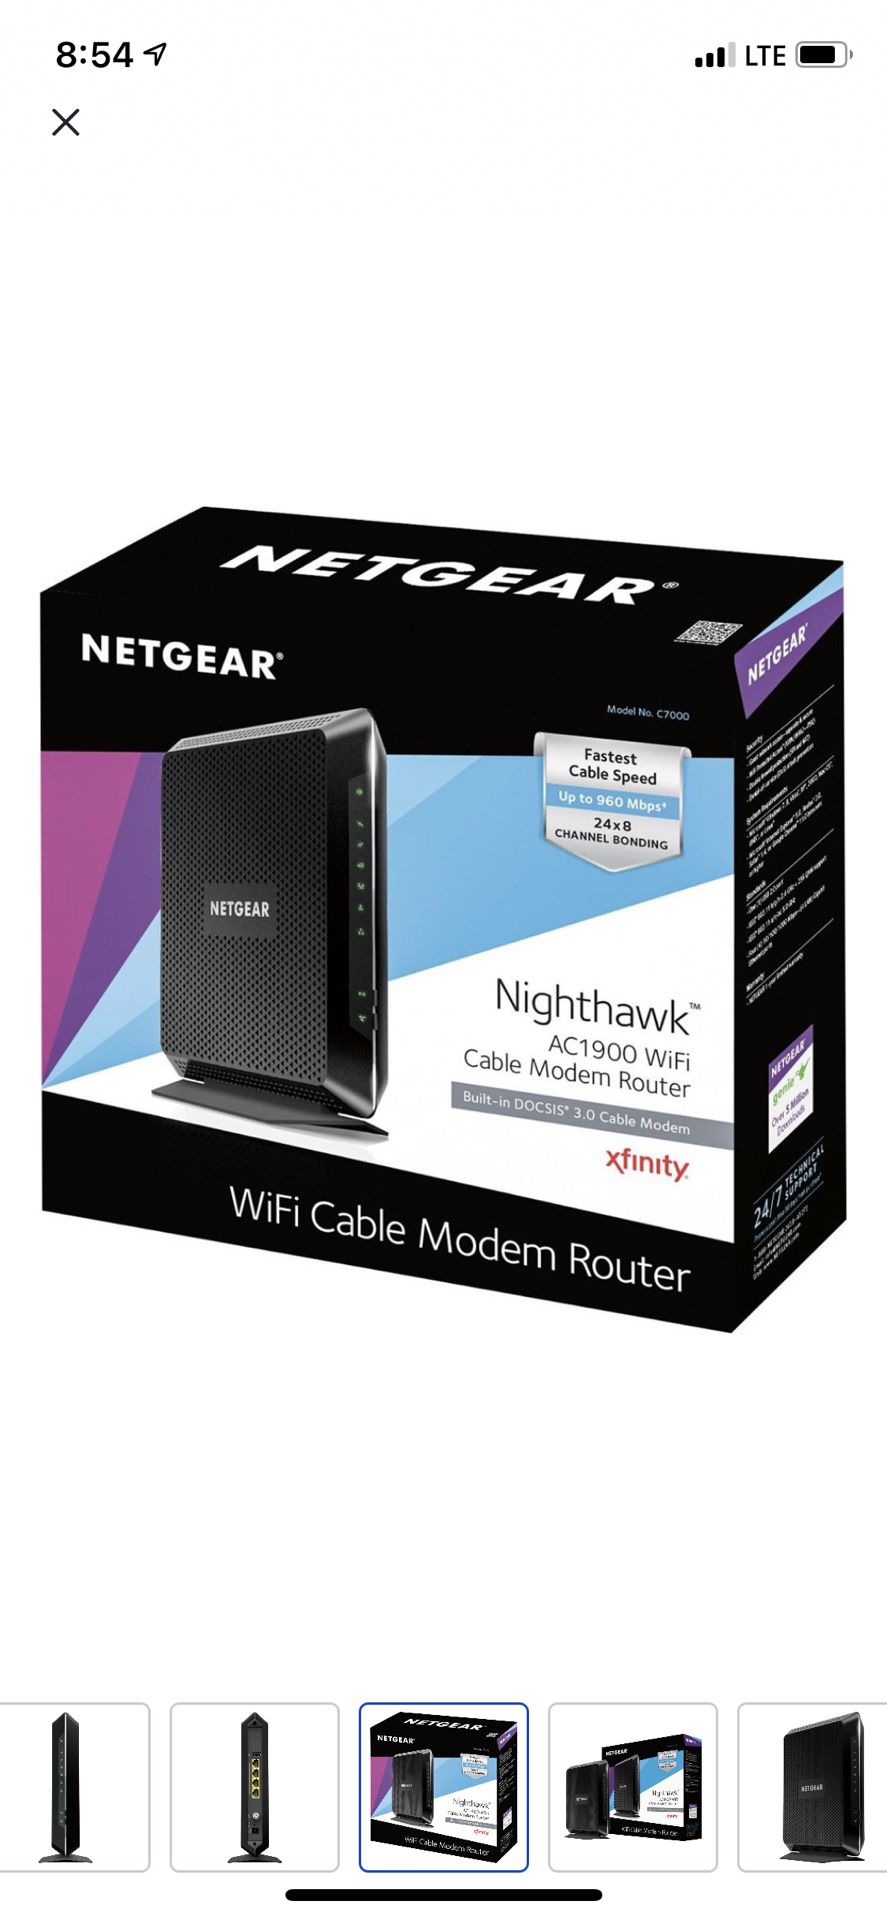 NETGEAR - Nighthawk Ac1900 Wifi Cable Modem Router